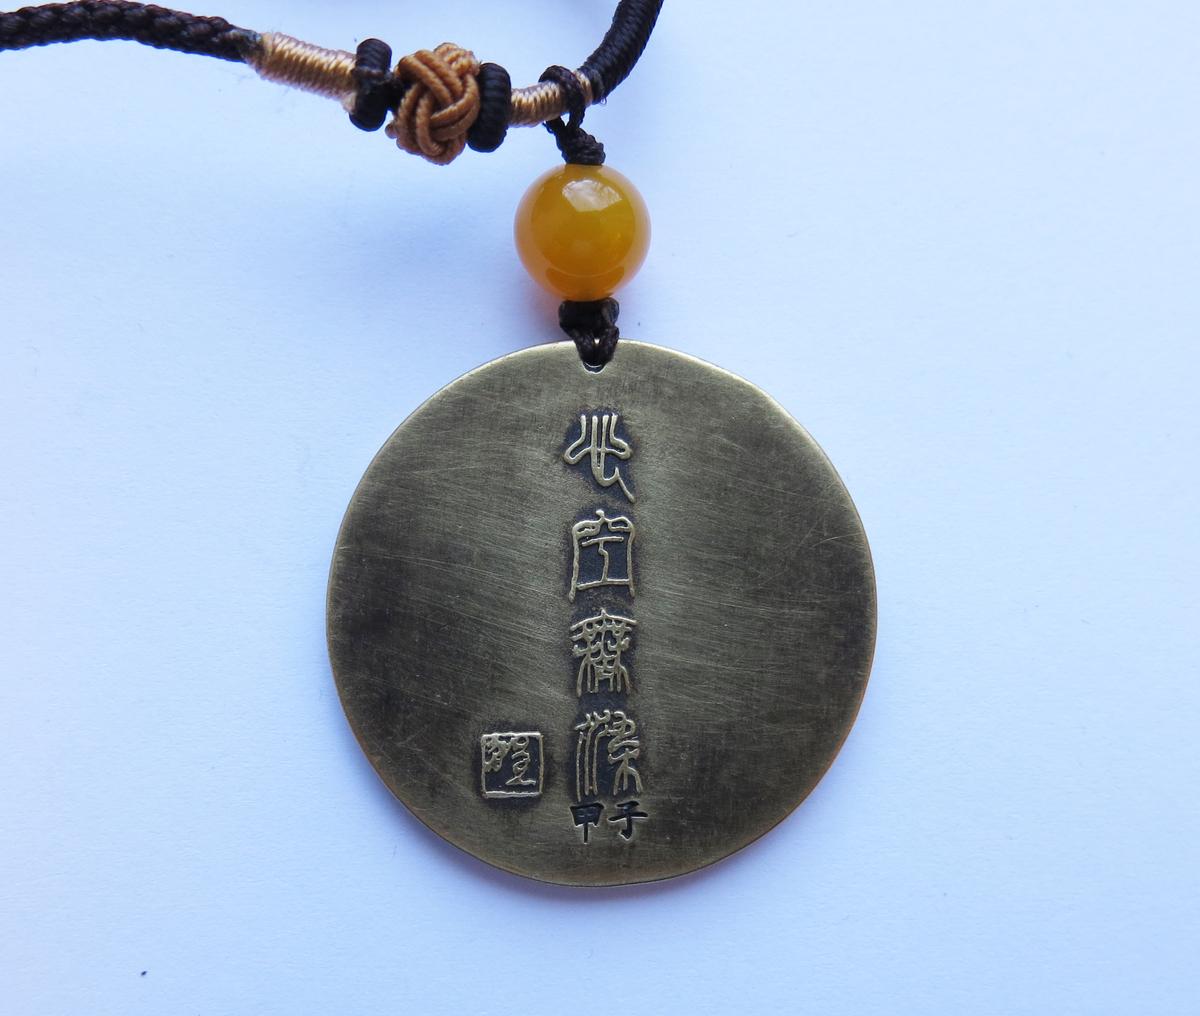 Motiv advers: Blad fra hjertetreet, med kinesiske skrifttegn.

Motiv revers: Tekst.